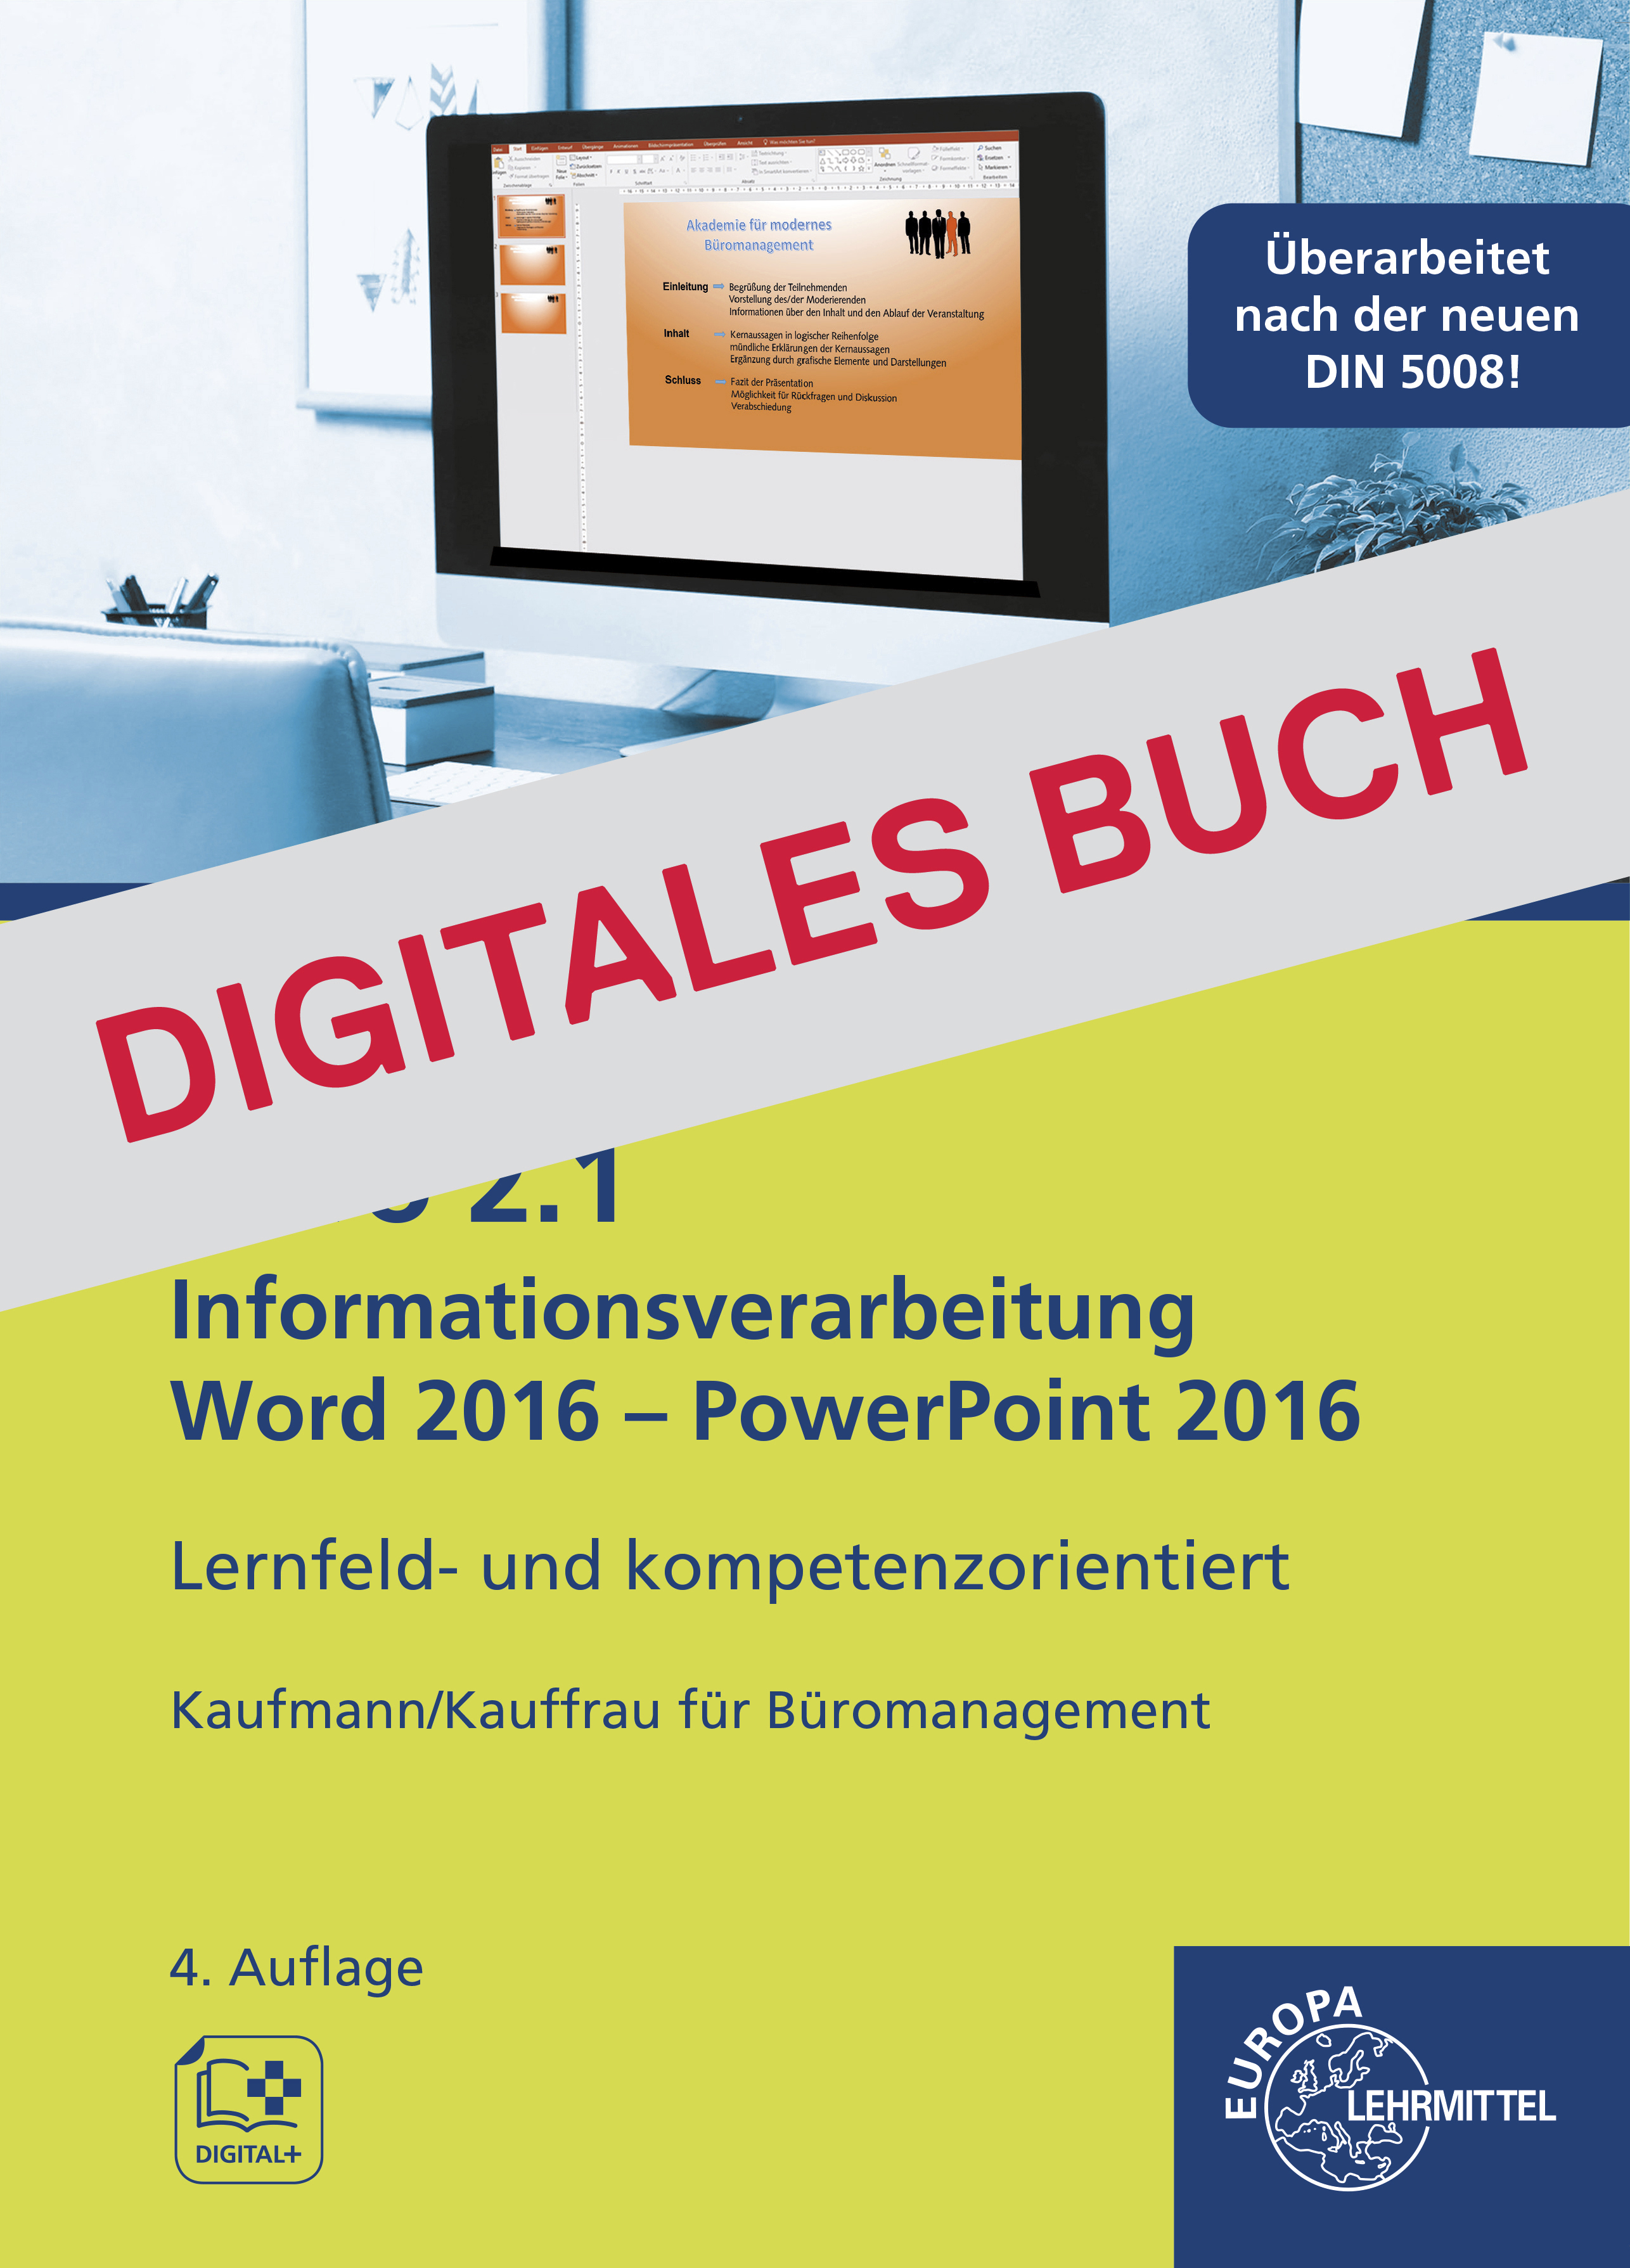 Büro 2.1, Informationsverarbeitung Word 2016/PP 2016 - Digitales Buch